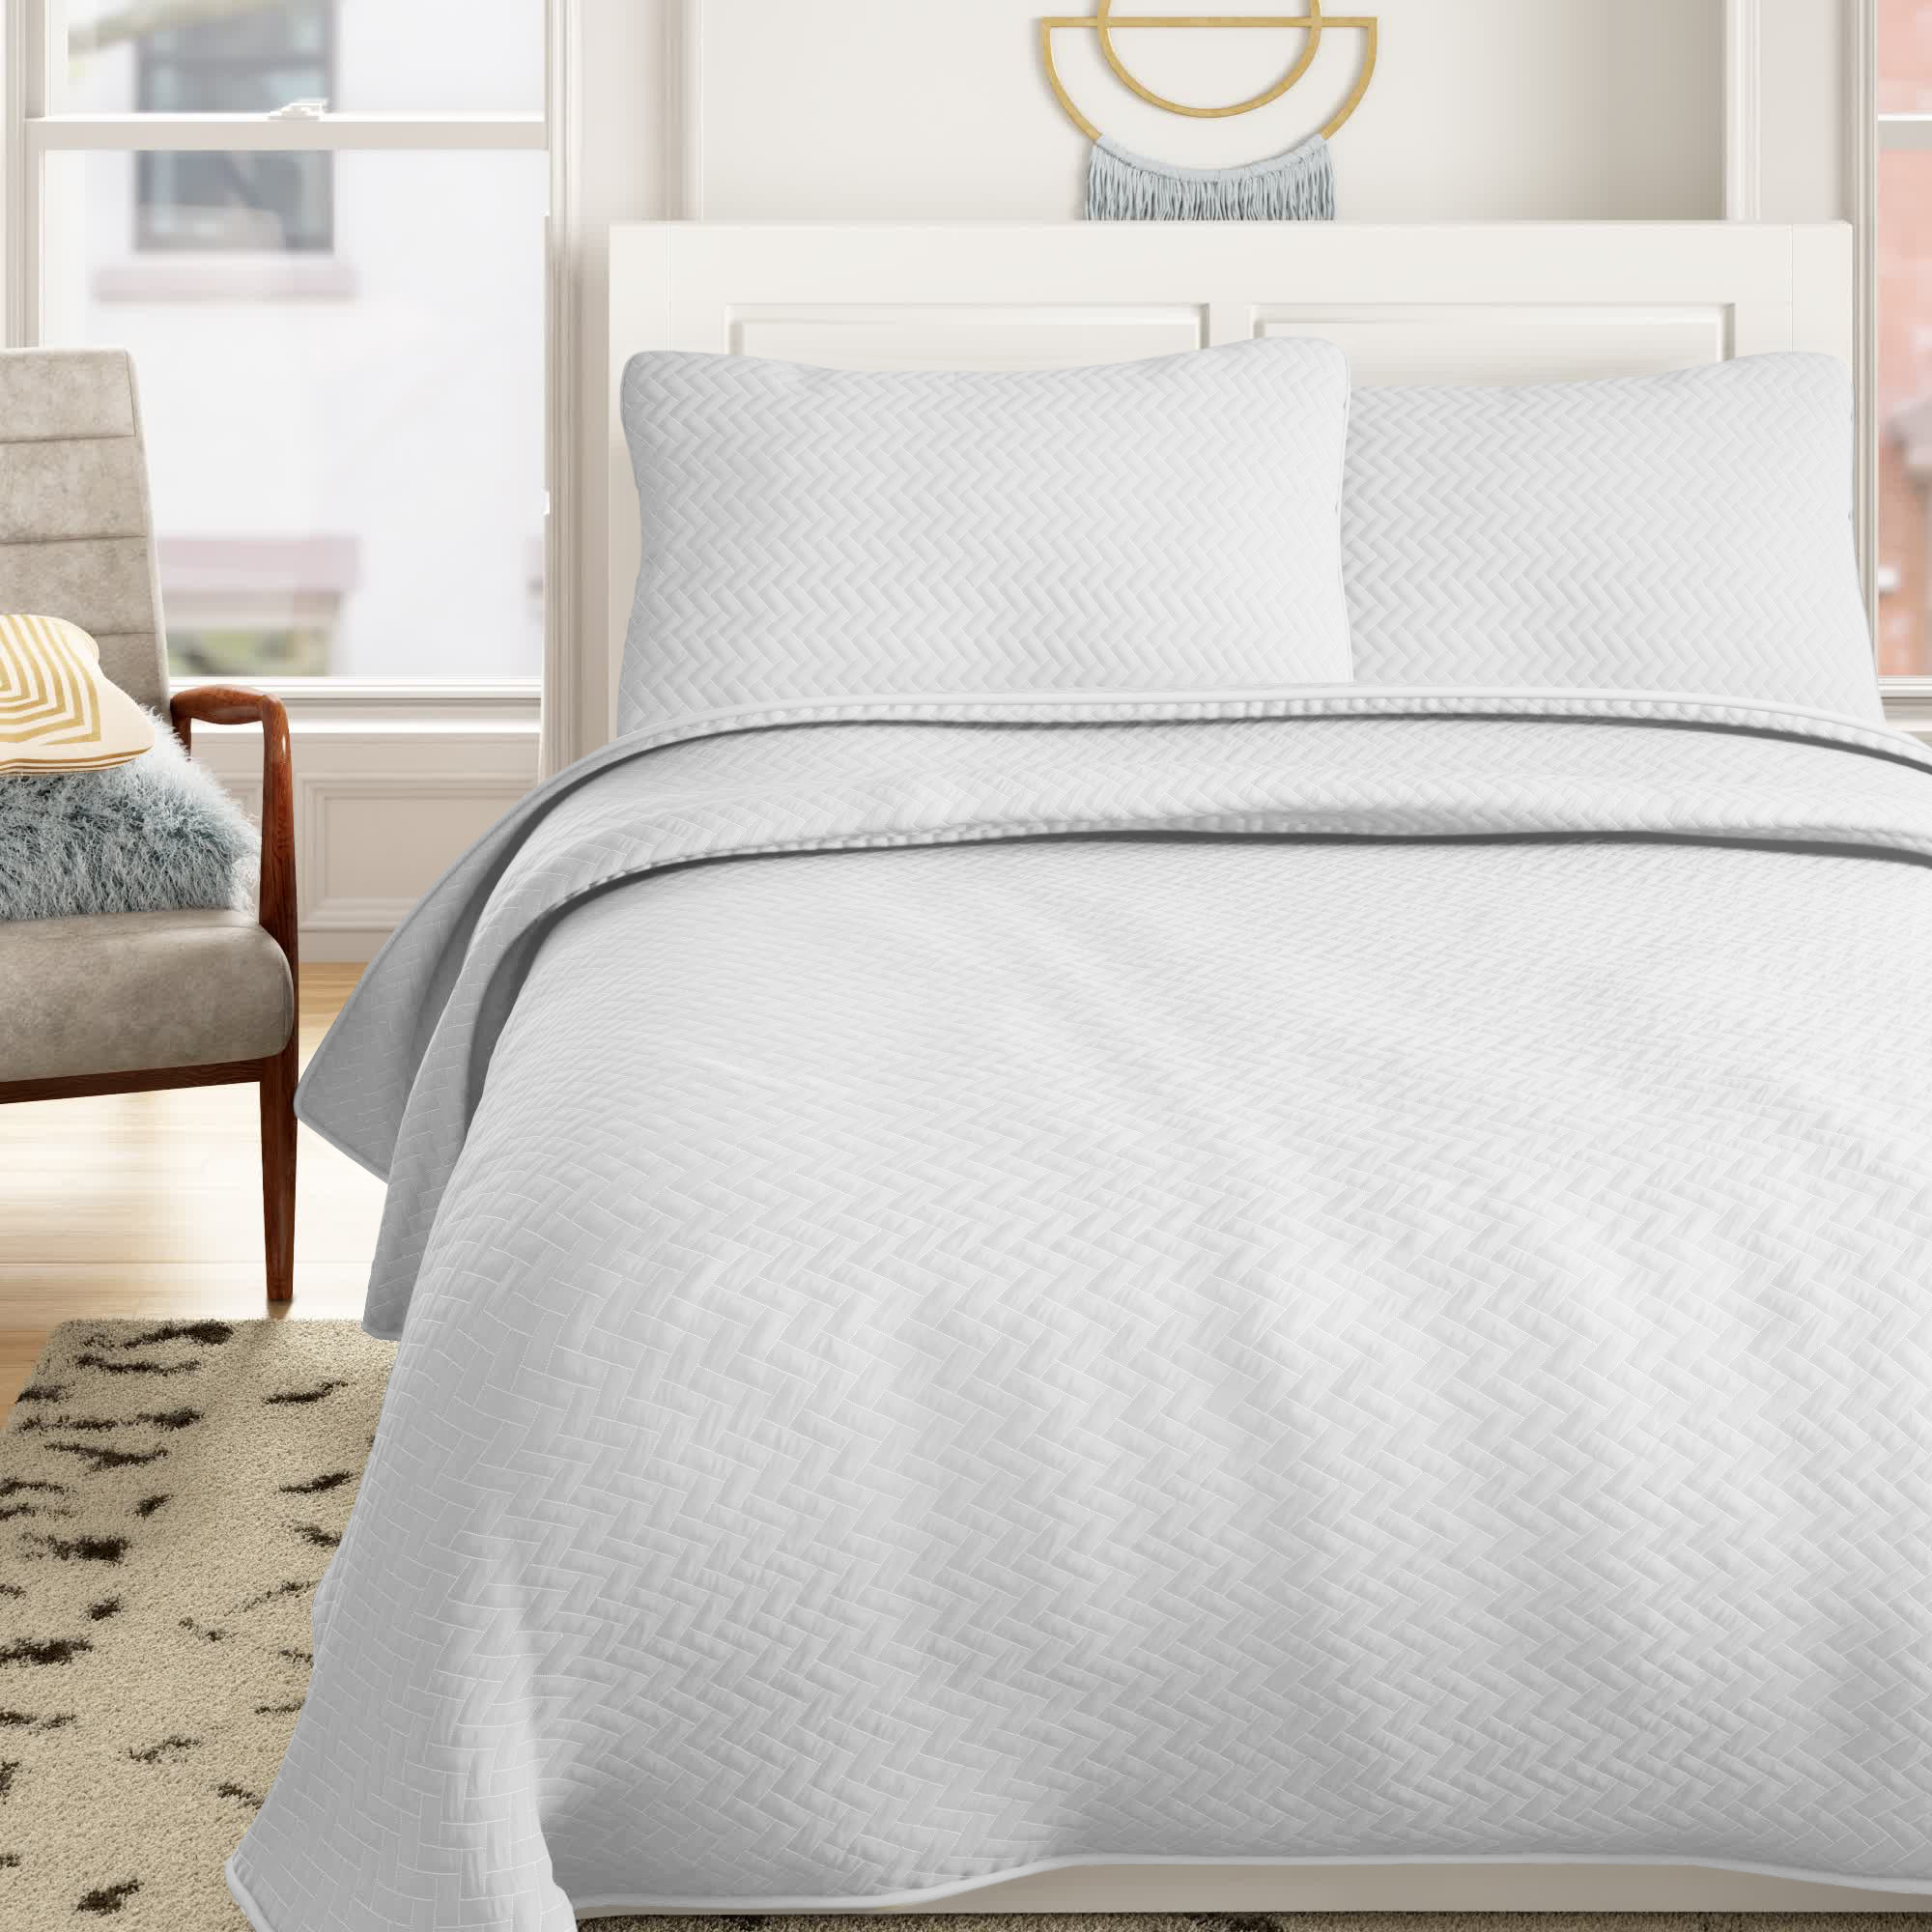 Sunflower Mandala Design Print Details about   White Quilted Bedspread & Pillow Shams Set 